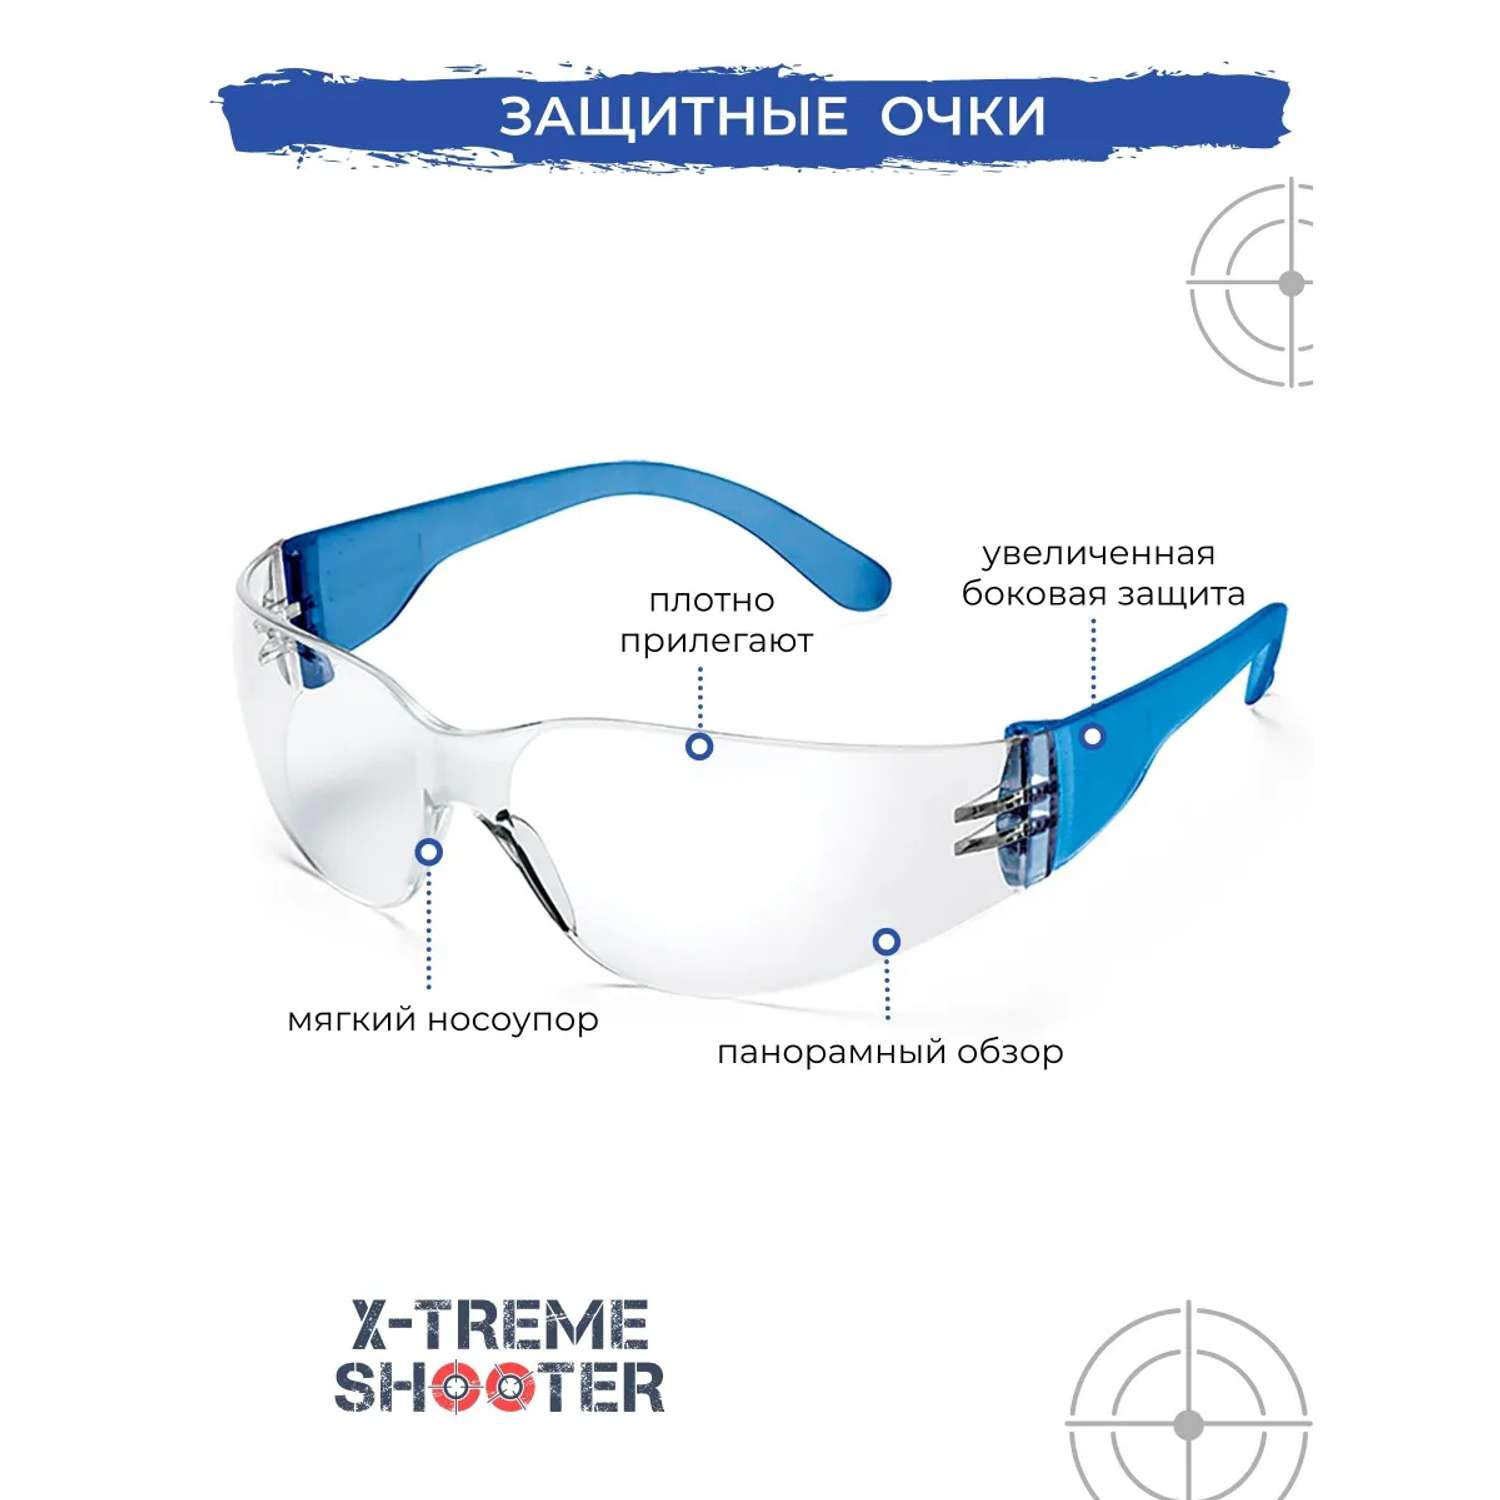 Набор X-Treme Shooter маска очки патронташ патроны - фото 10